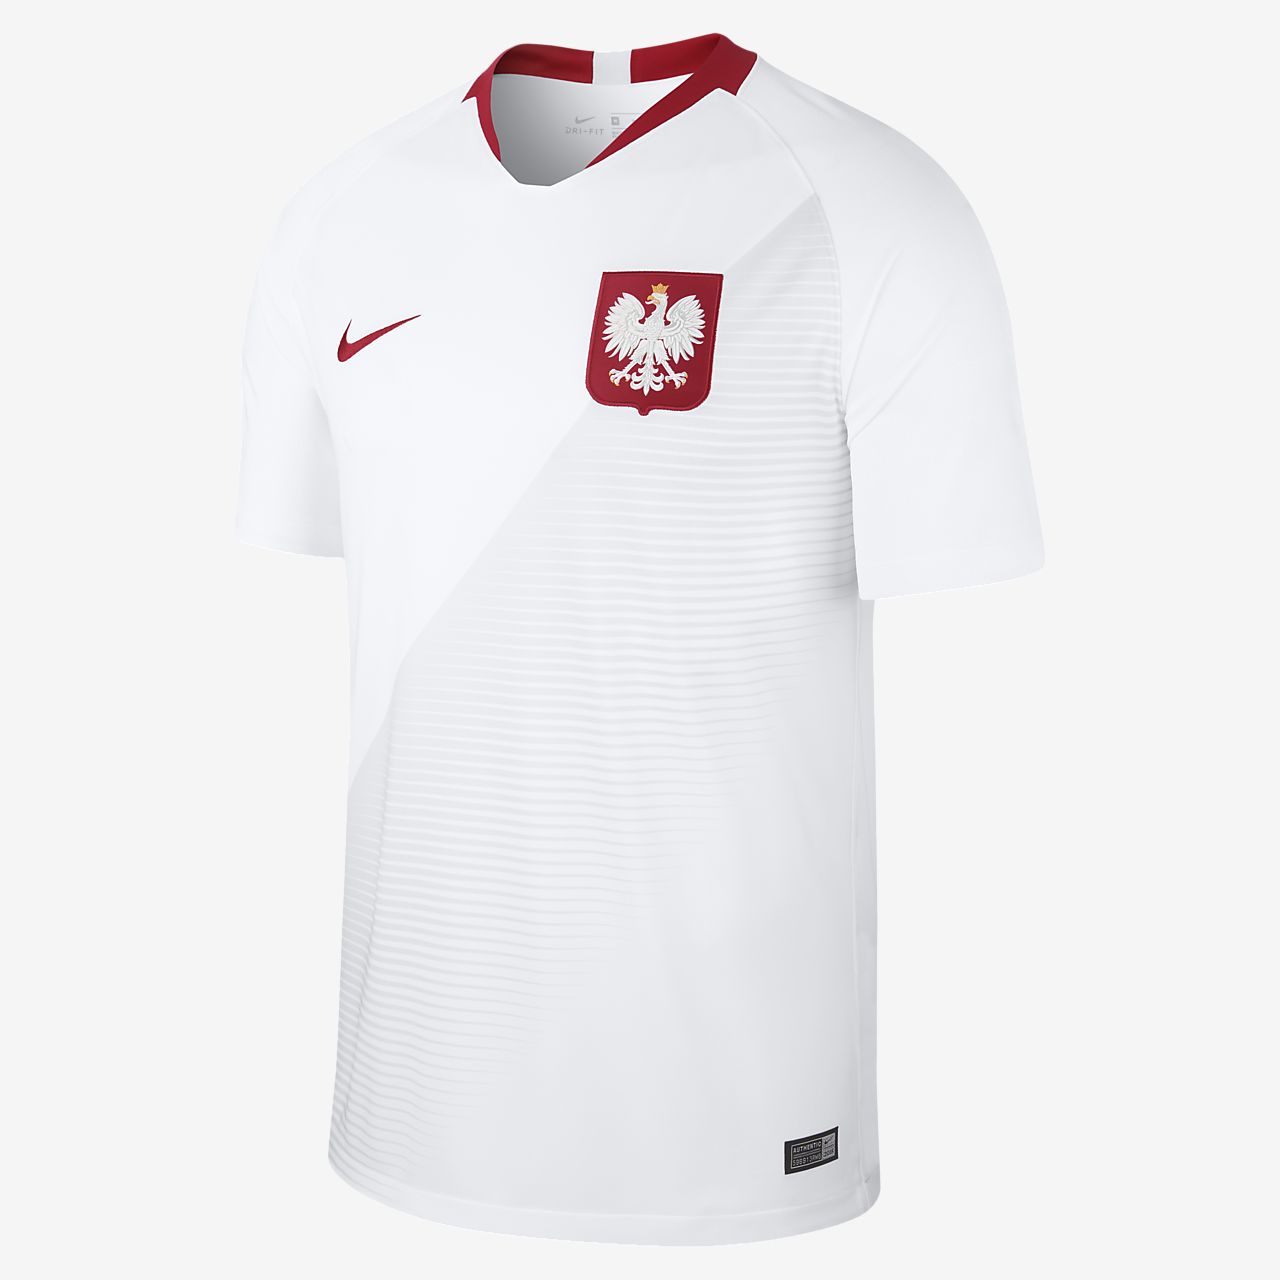 2018 Poland Stadium Home Men's Football Shirt